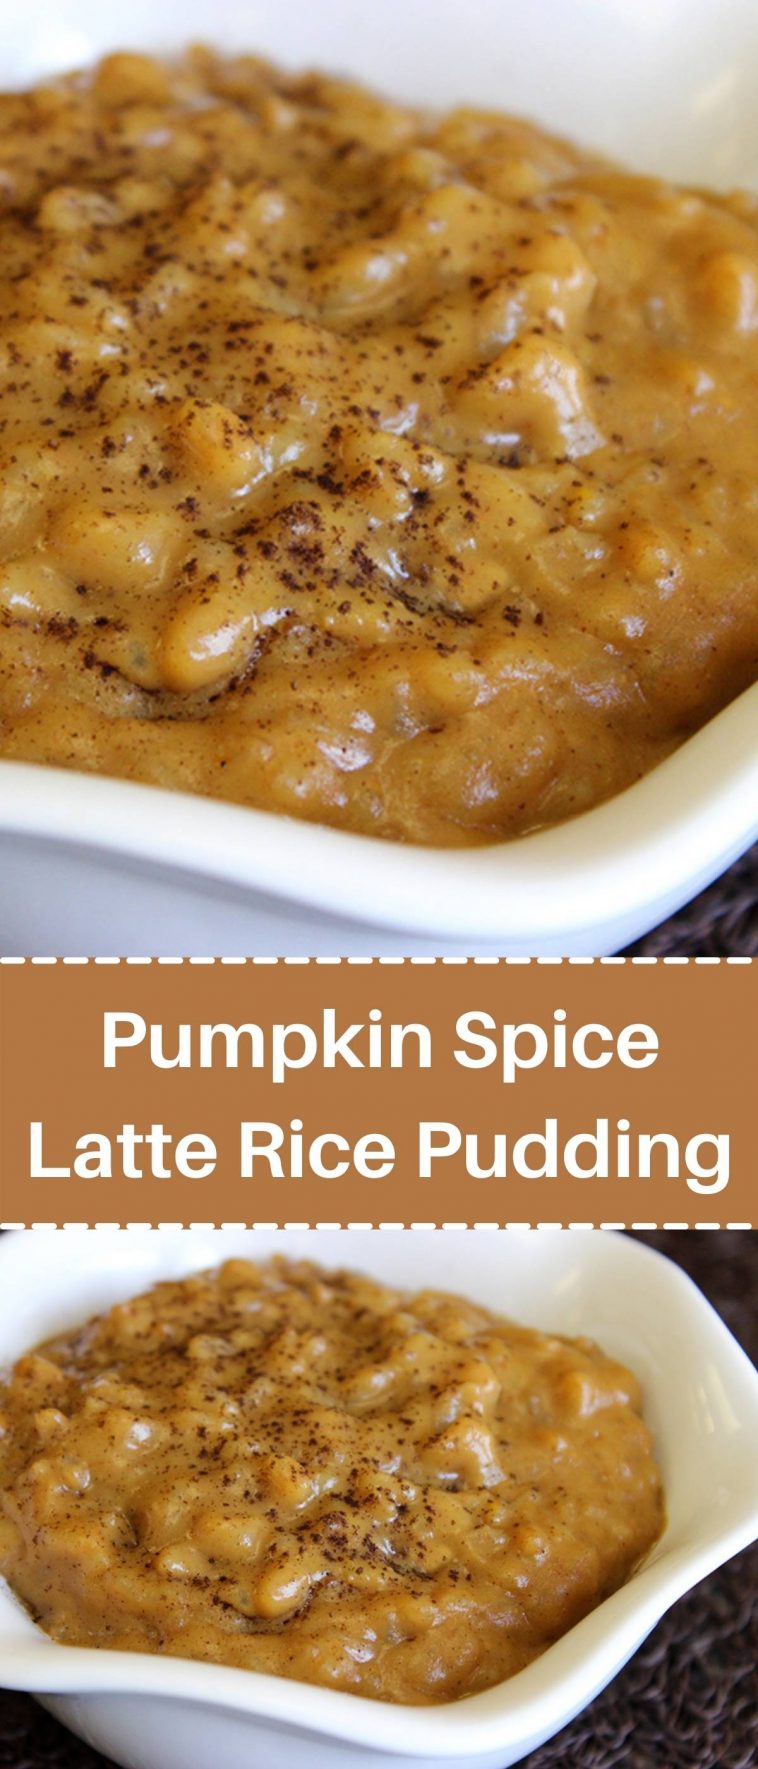 Pumpkin Spice Latte Rice Pudding